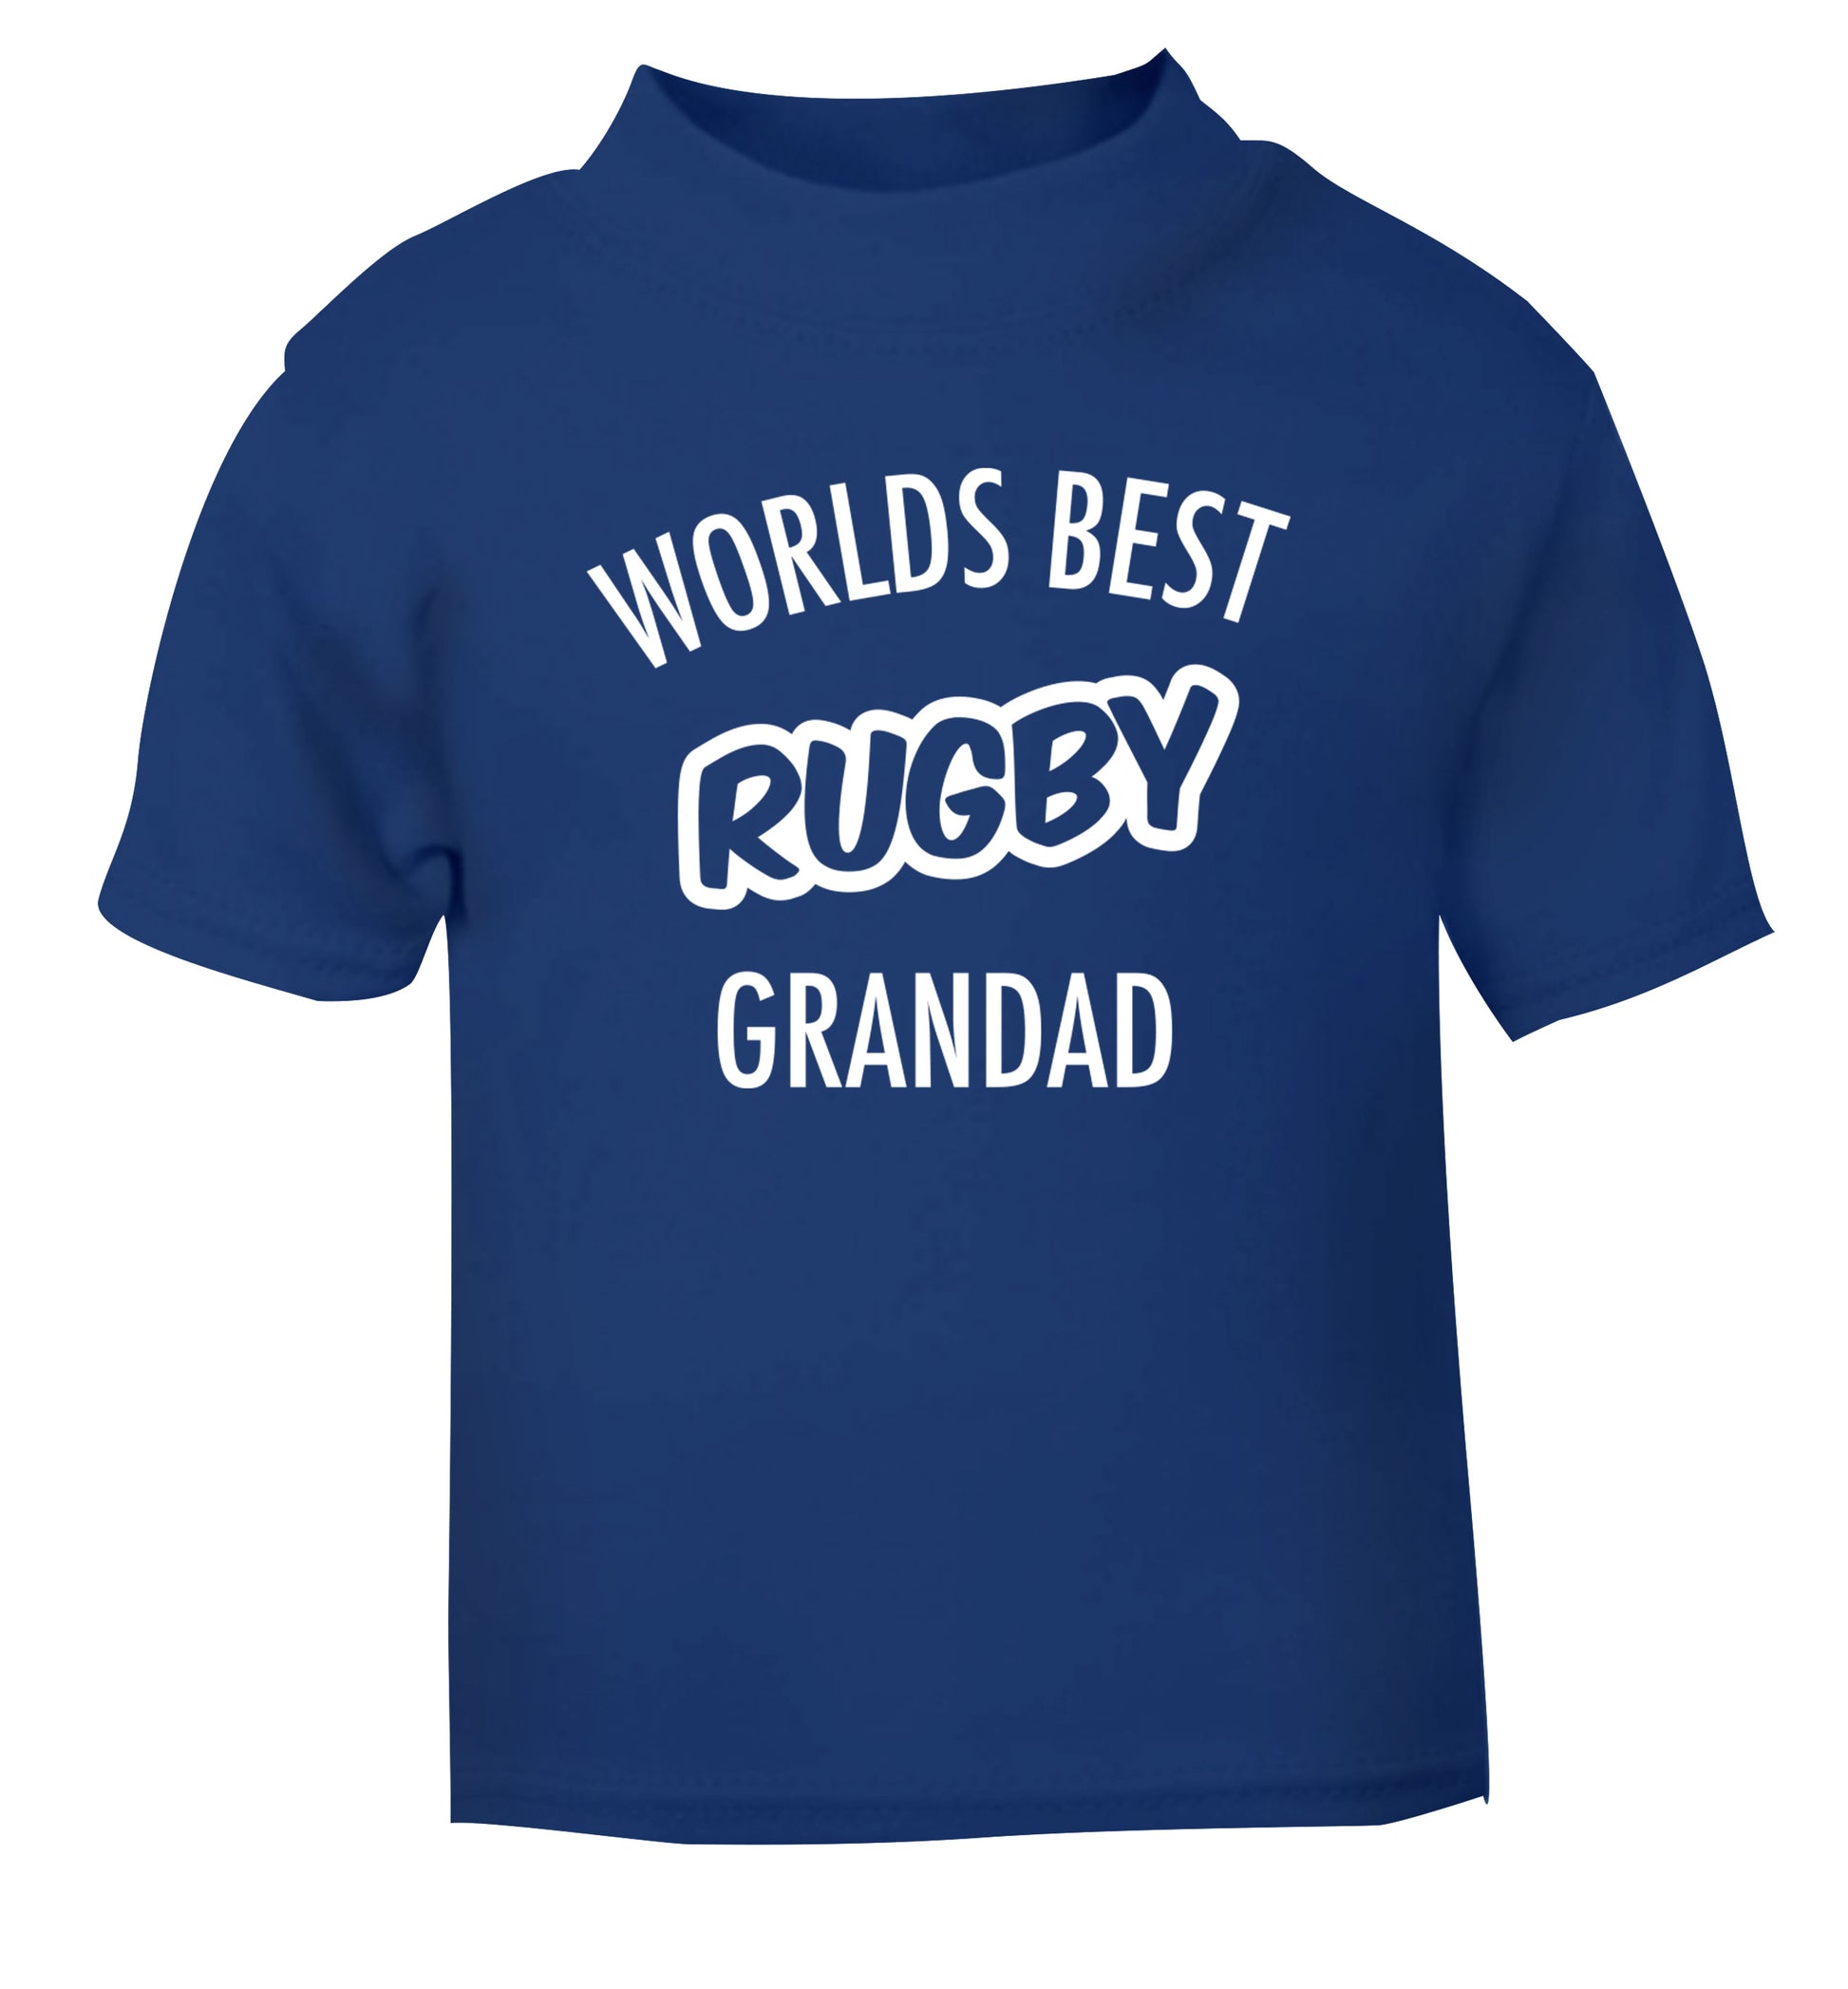 Worlds best rugby grandad blue Baby Toddler Tshirt 2 Years